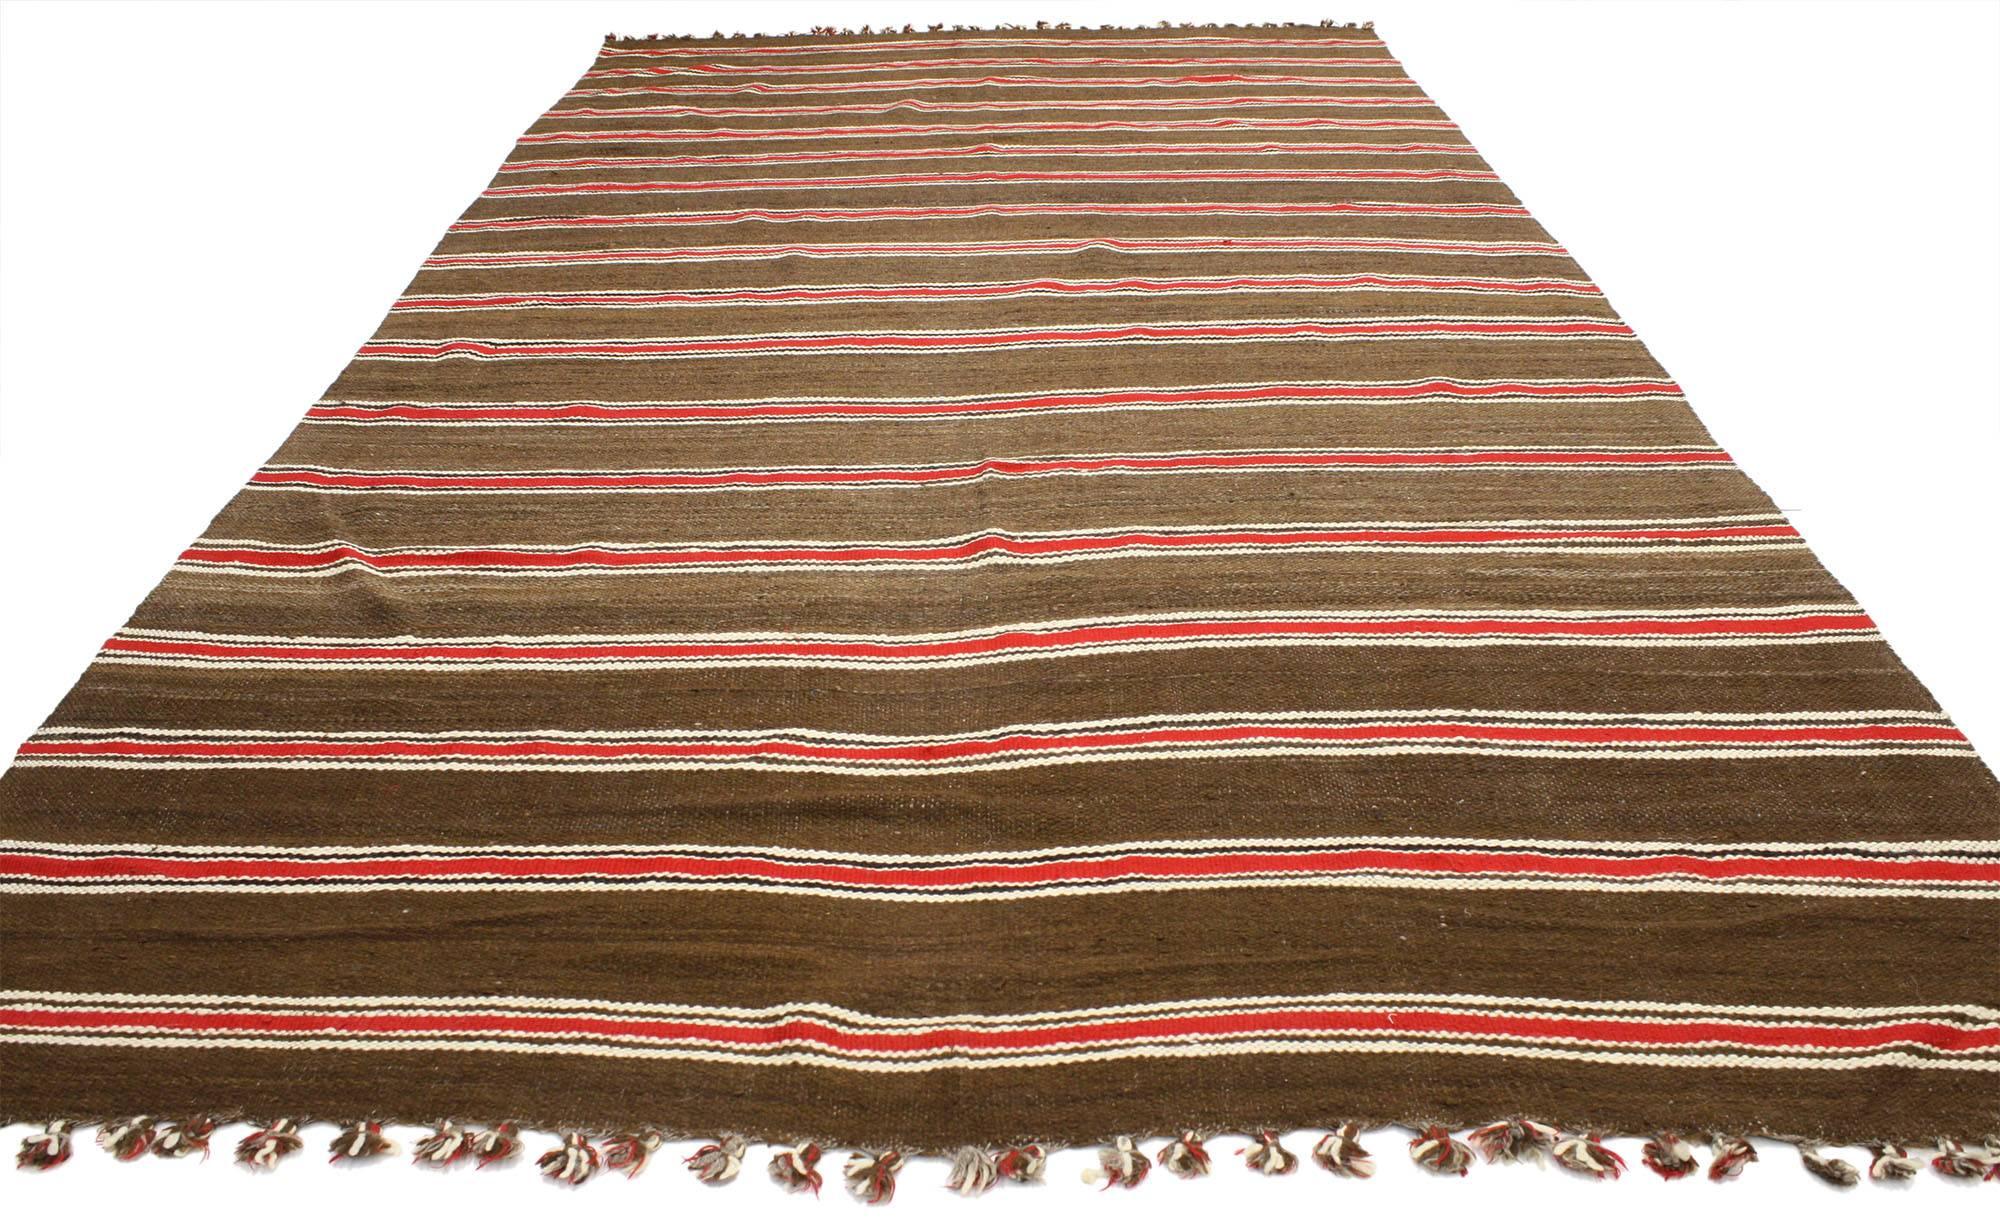 220553 Vintage Berber Moroccan Kilim rug with stripes and MCM style. This handwoven wool vintage Moroccan Kilim rug with stripes features a mid-century modern style. It is rendered in variegated shades of coffee, sienna, brown, scarlet red, ruby